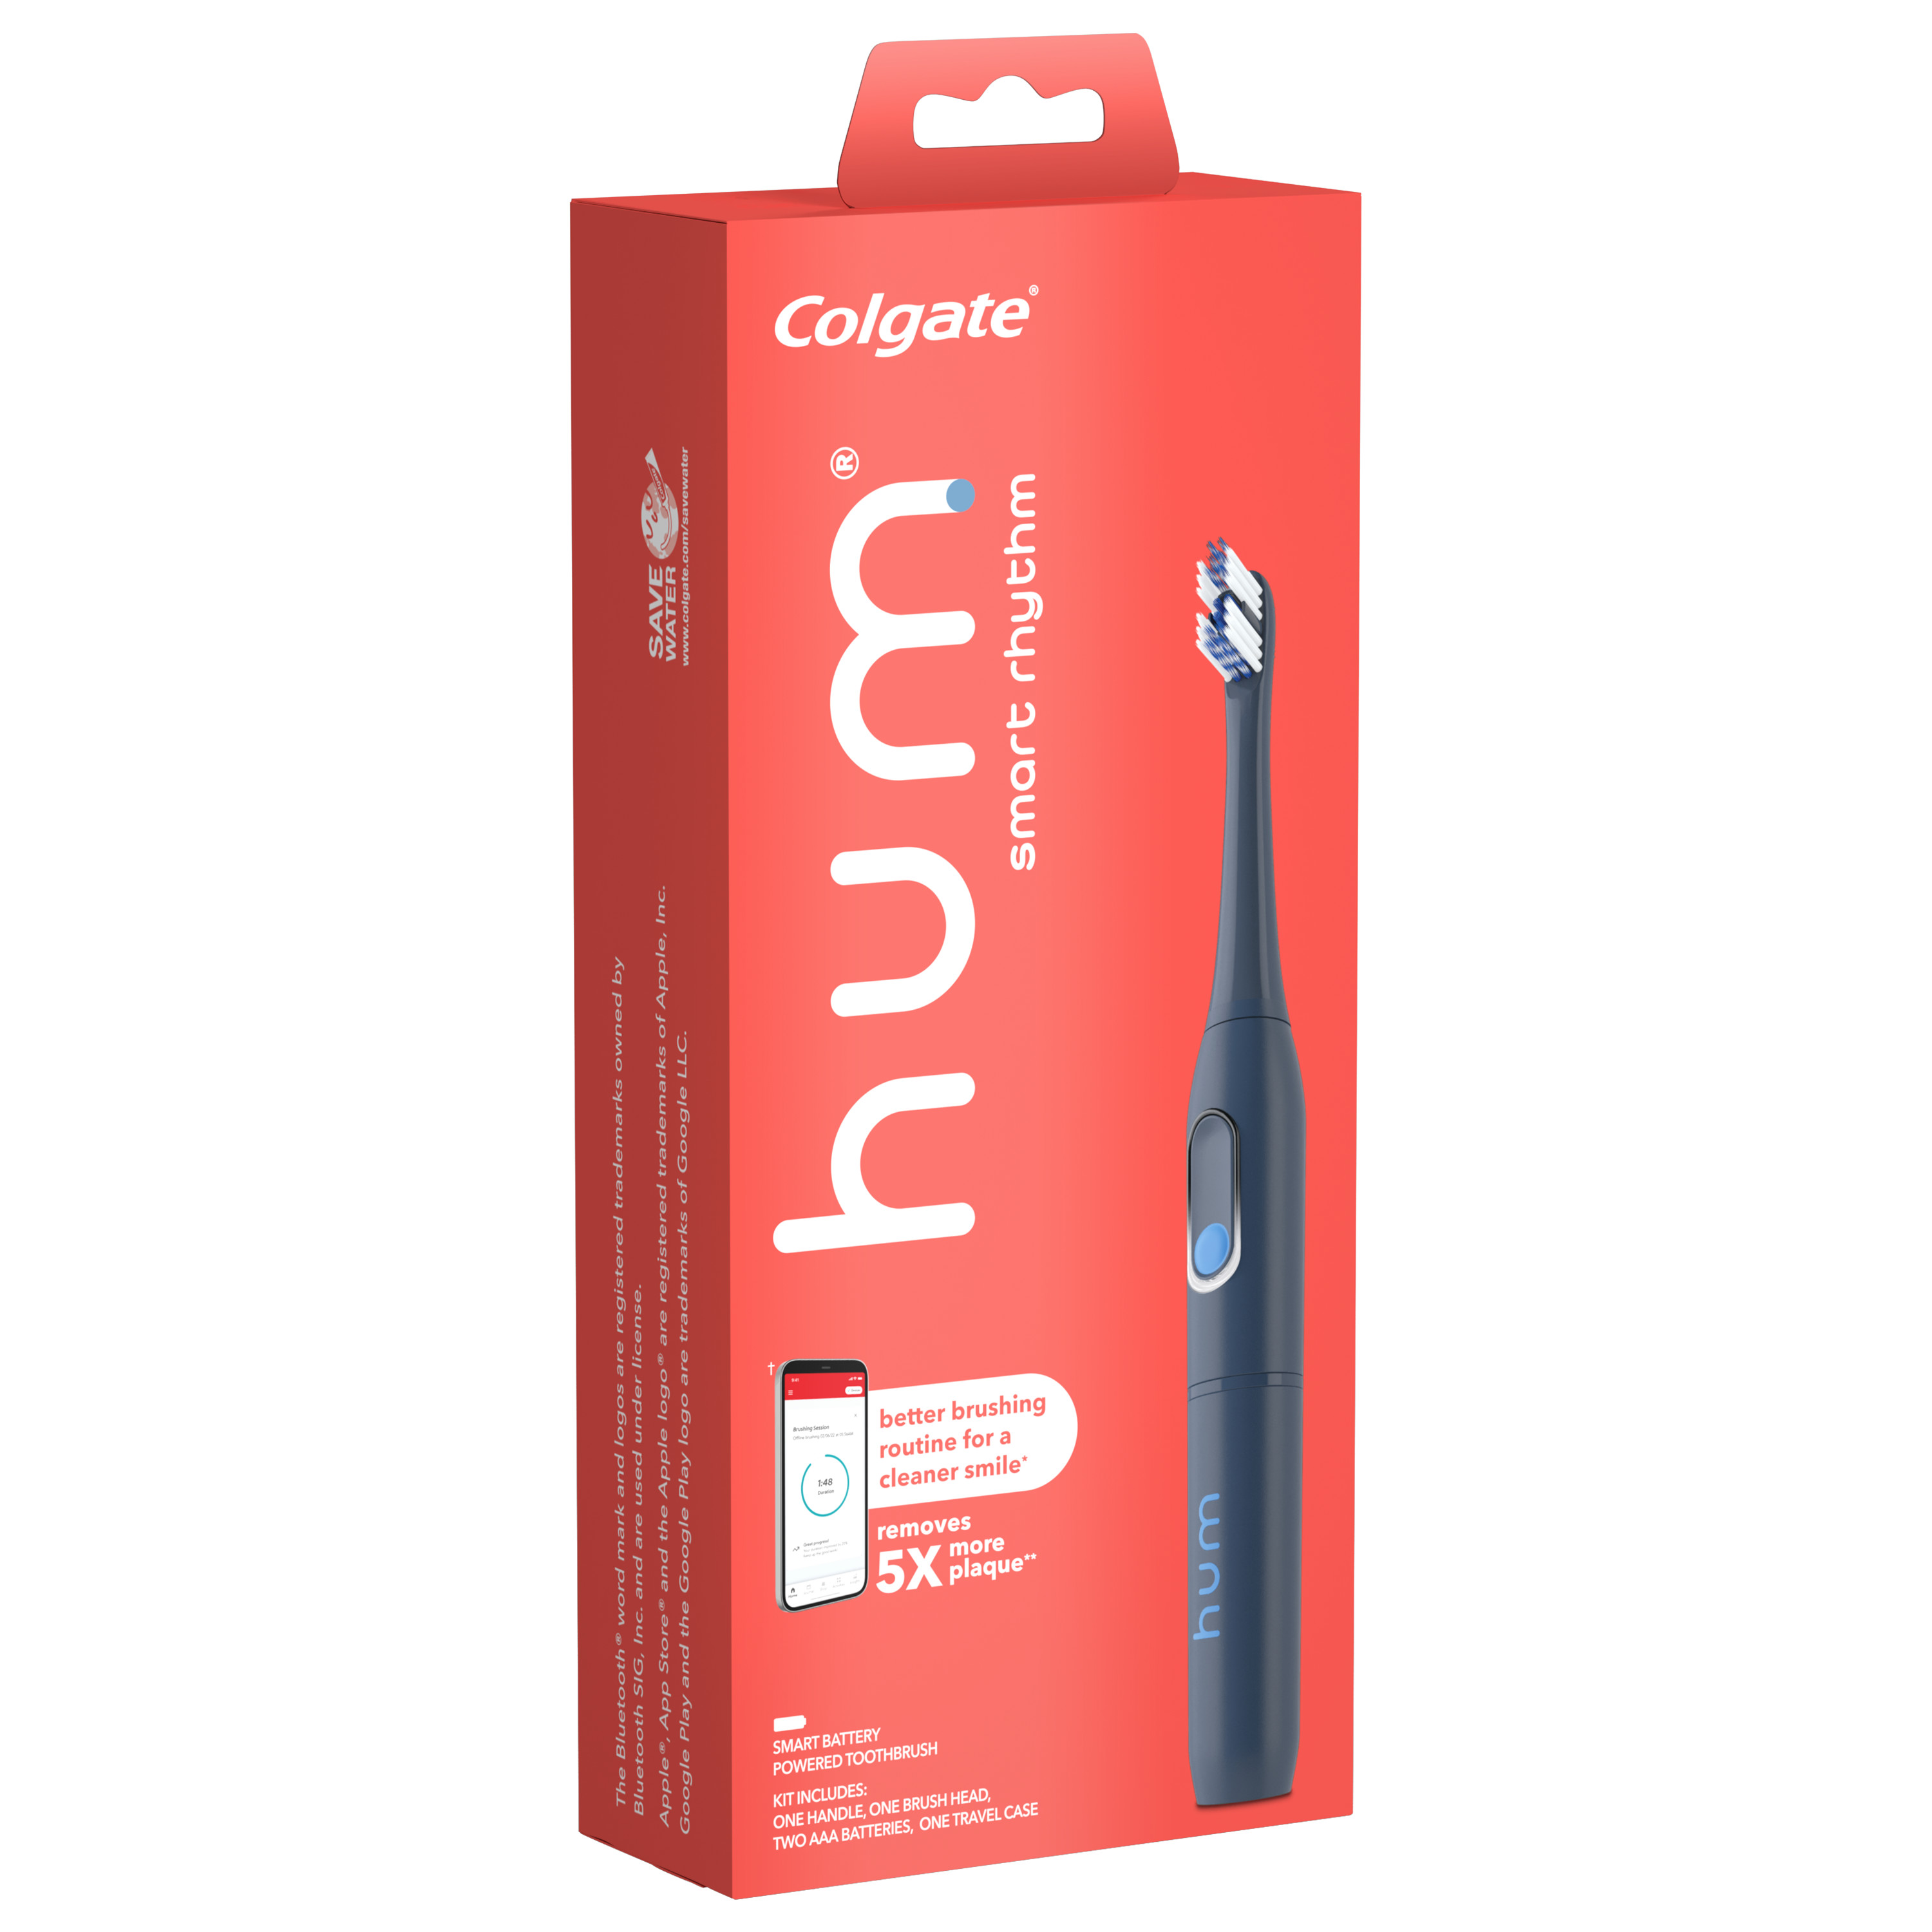 Hum by Colgate Smart Rhythm Sonic Adult Toothbrush Kit, Battery-Powered, Slate Grey - image 4 of 7